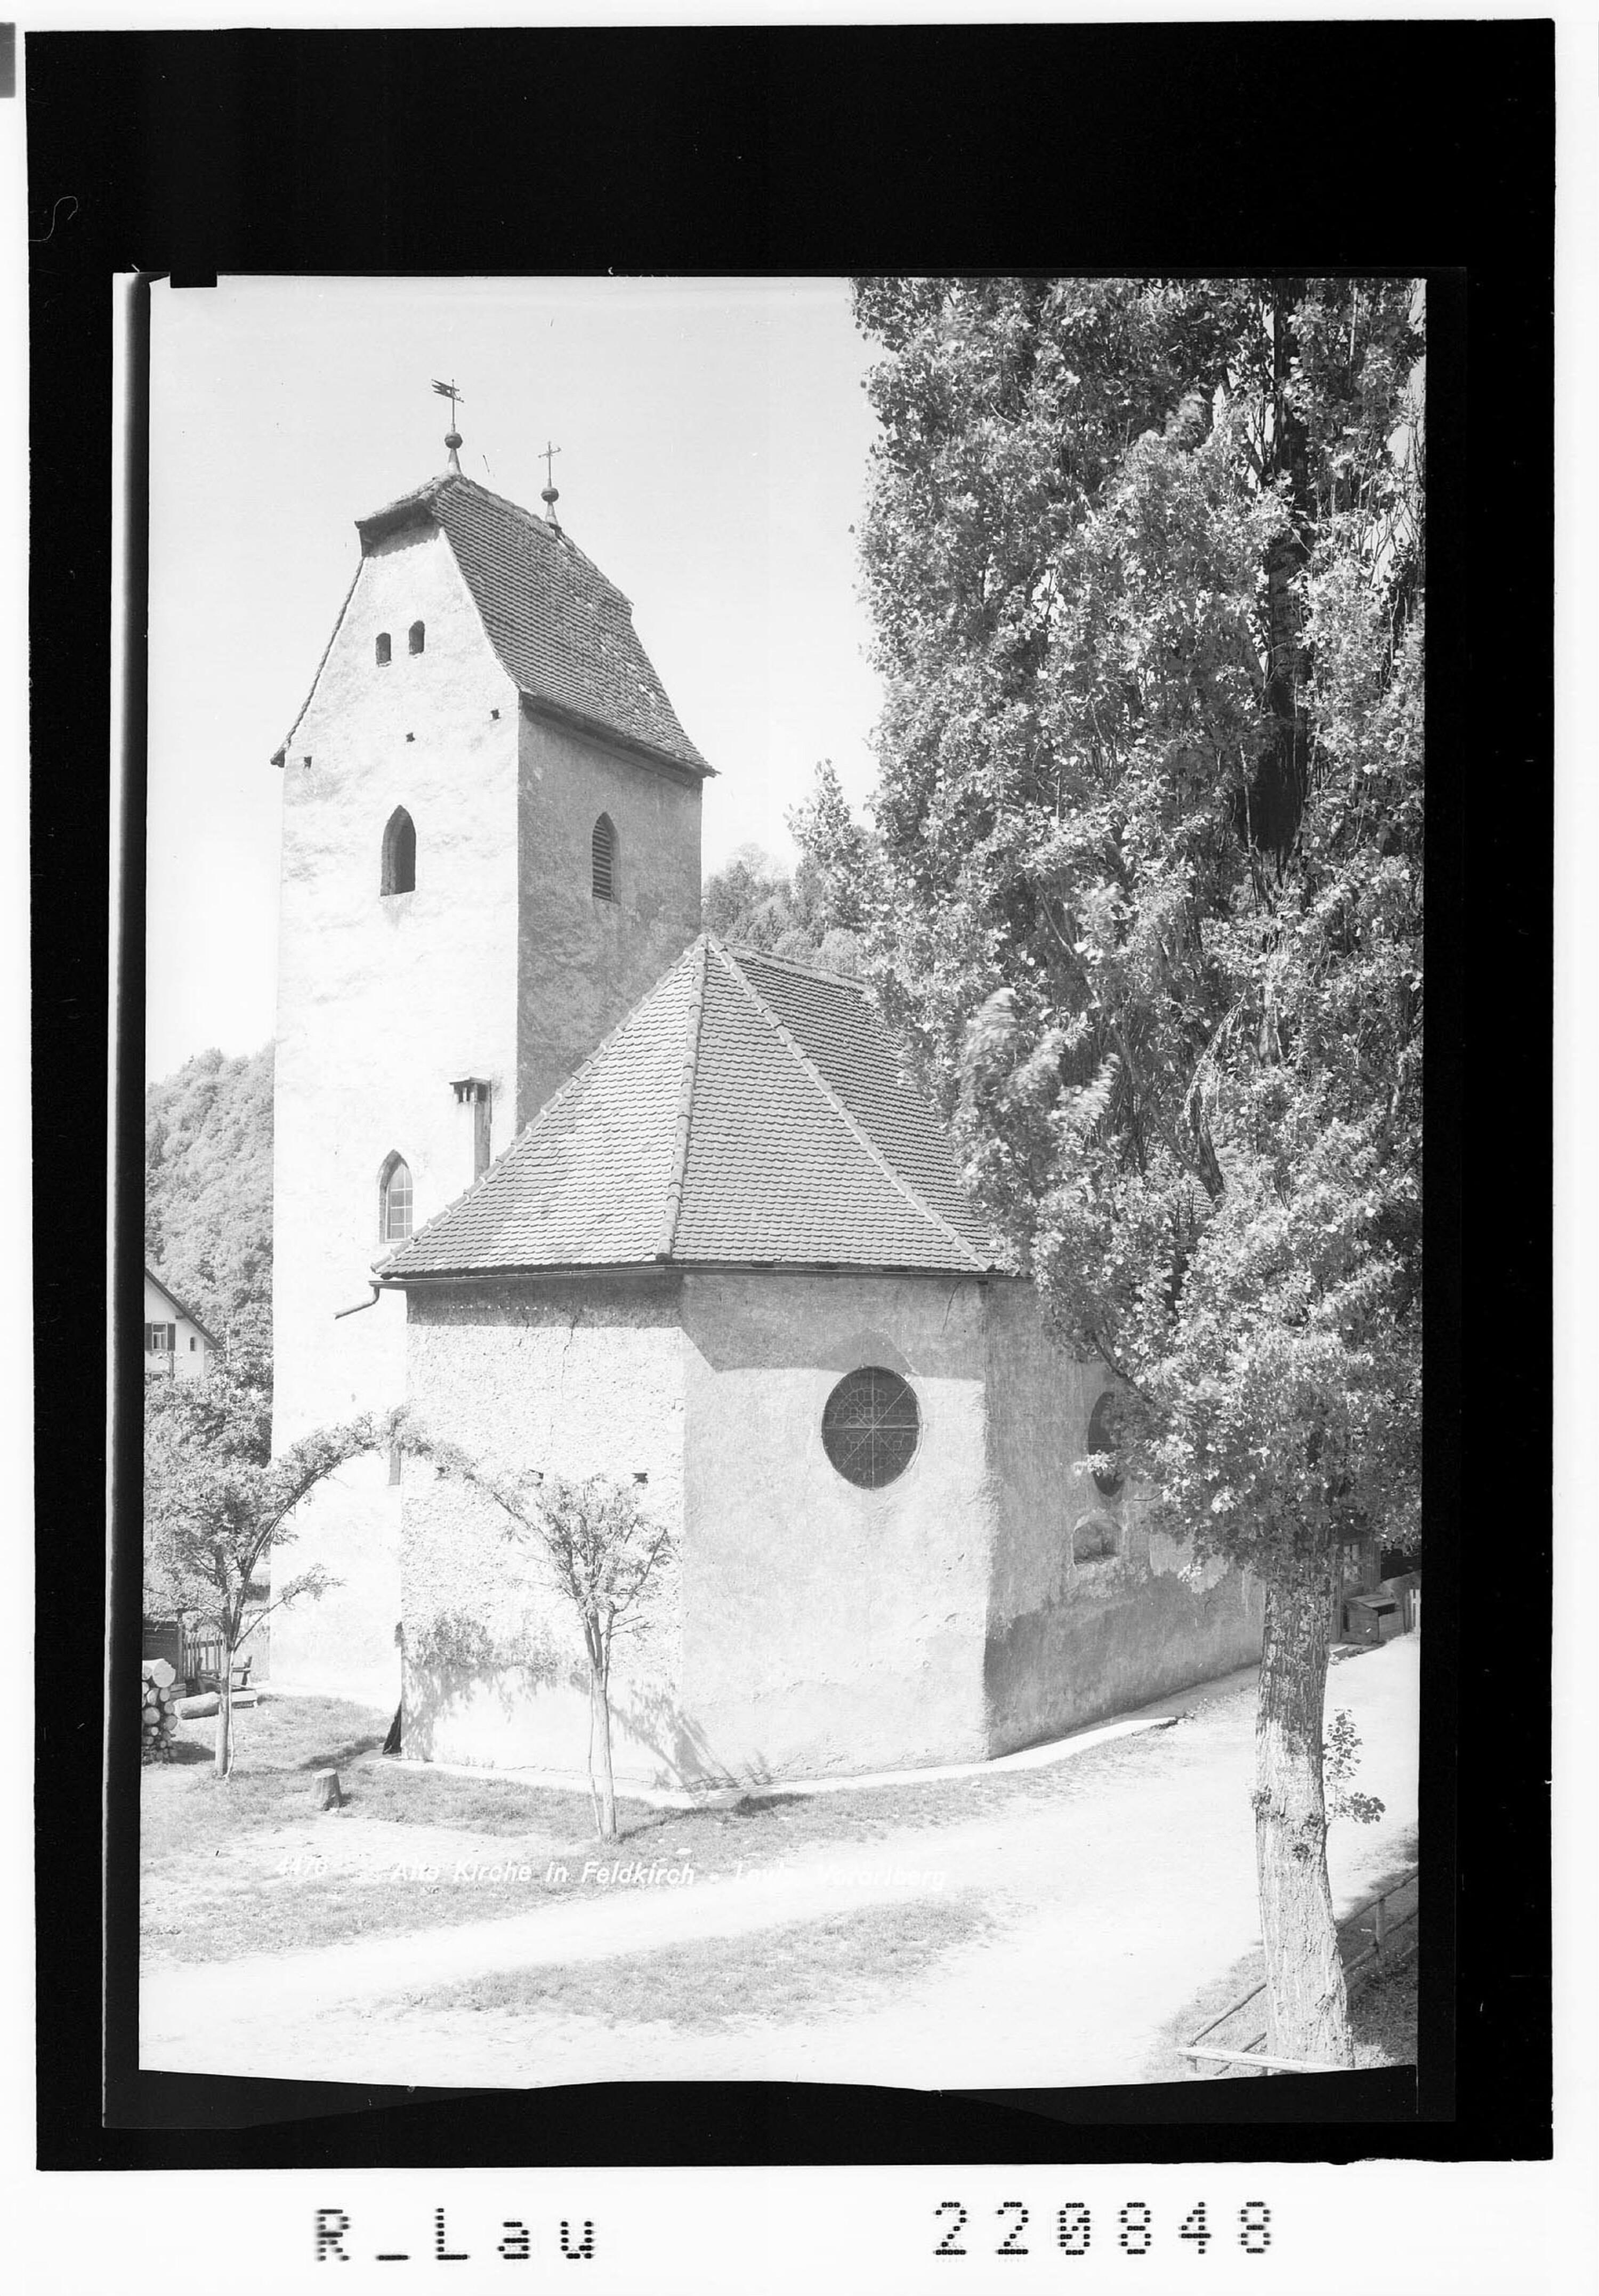 Alte Kirche in Feldkirch - Levis></div>


    <hr>
    <div class=